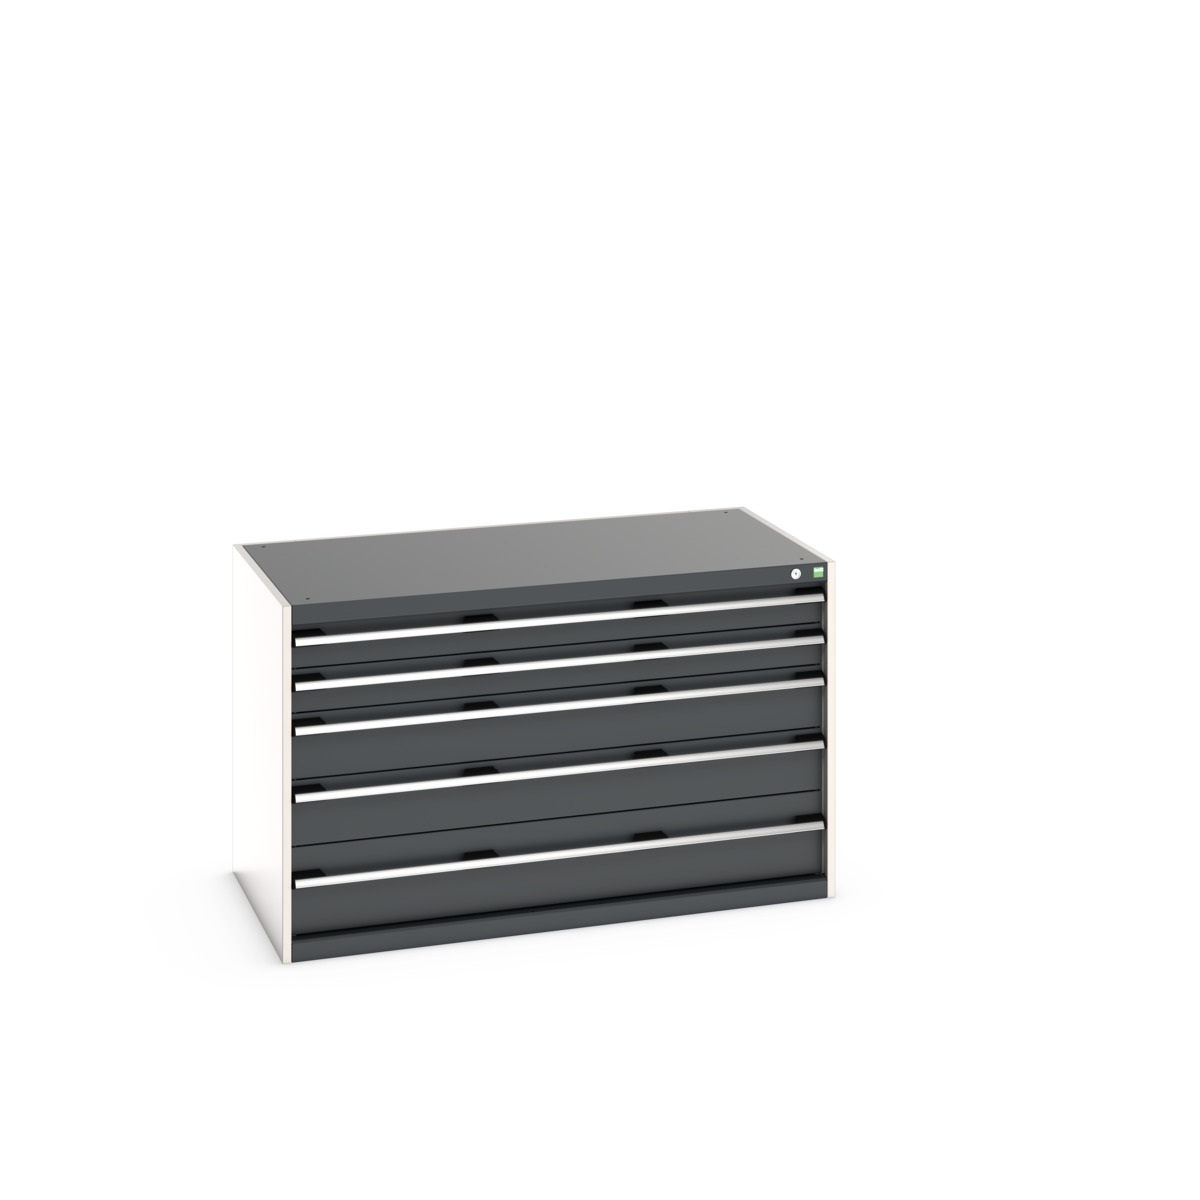 40030008. - cubio drawer cabinet